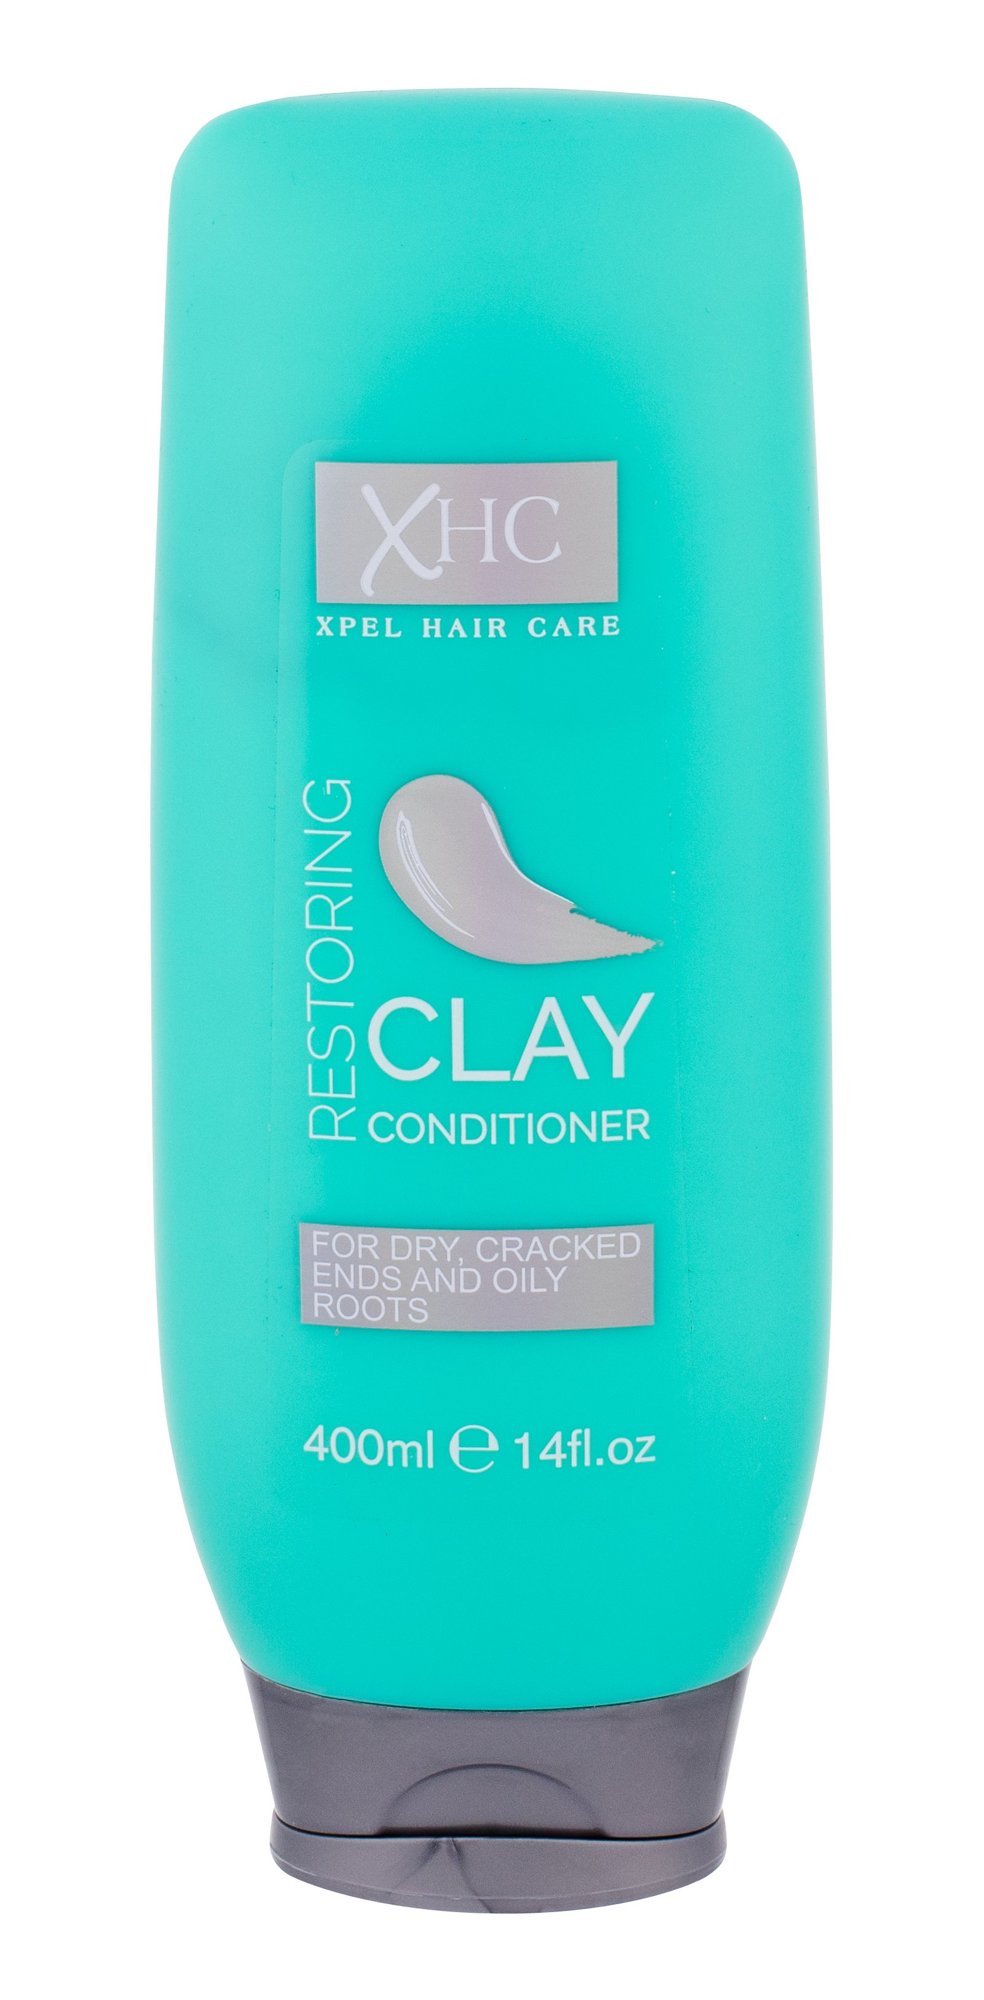 Xpel Hair Care Restoring Clay 400ml kondicionierius